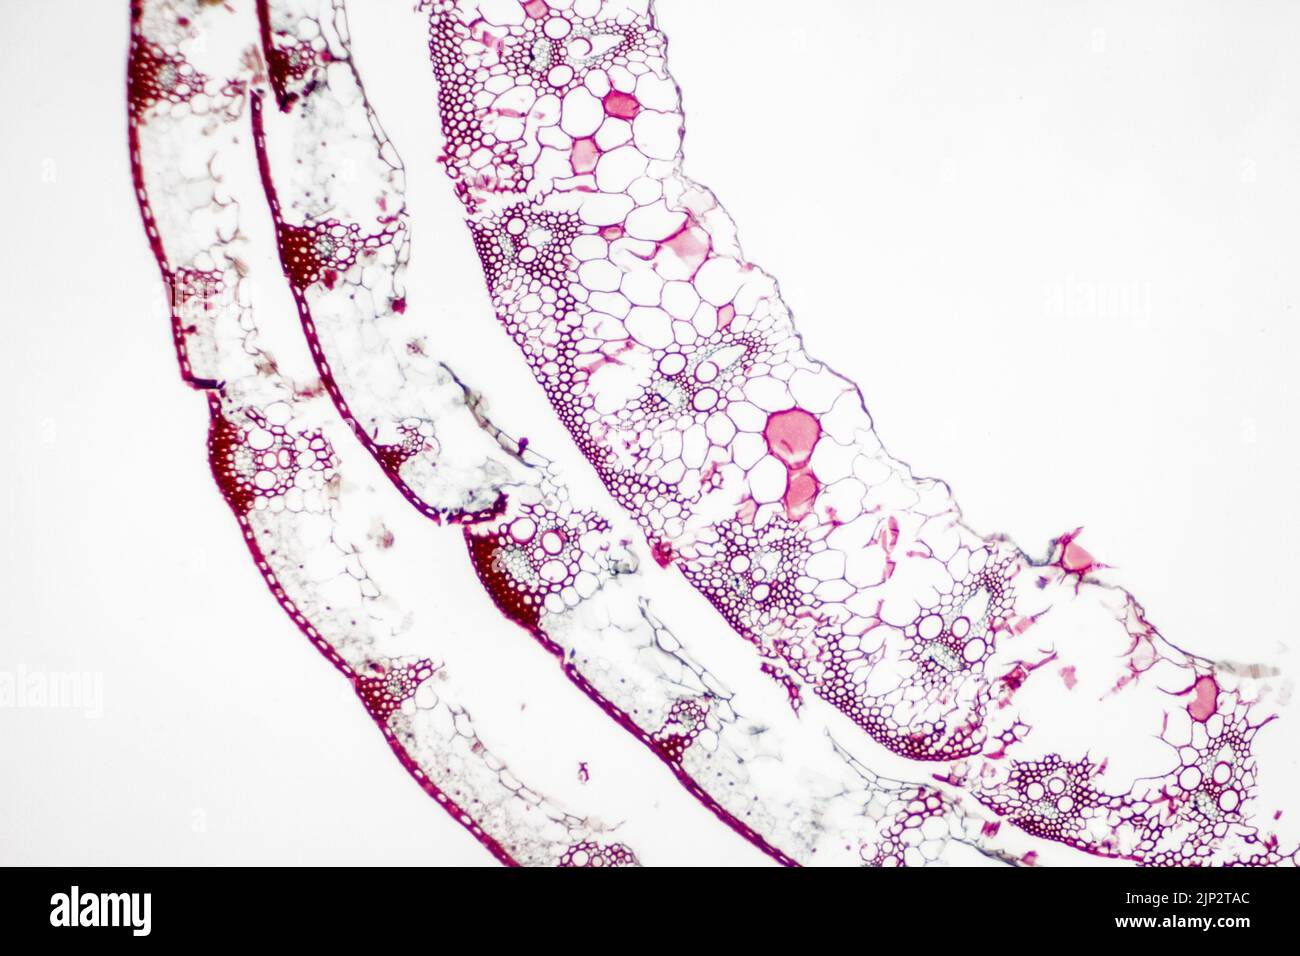 Parasitic plant fungus Puccinia microscope slide. Stock Photo